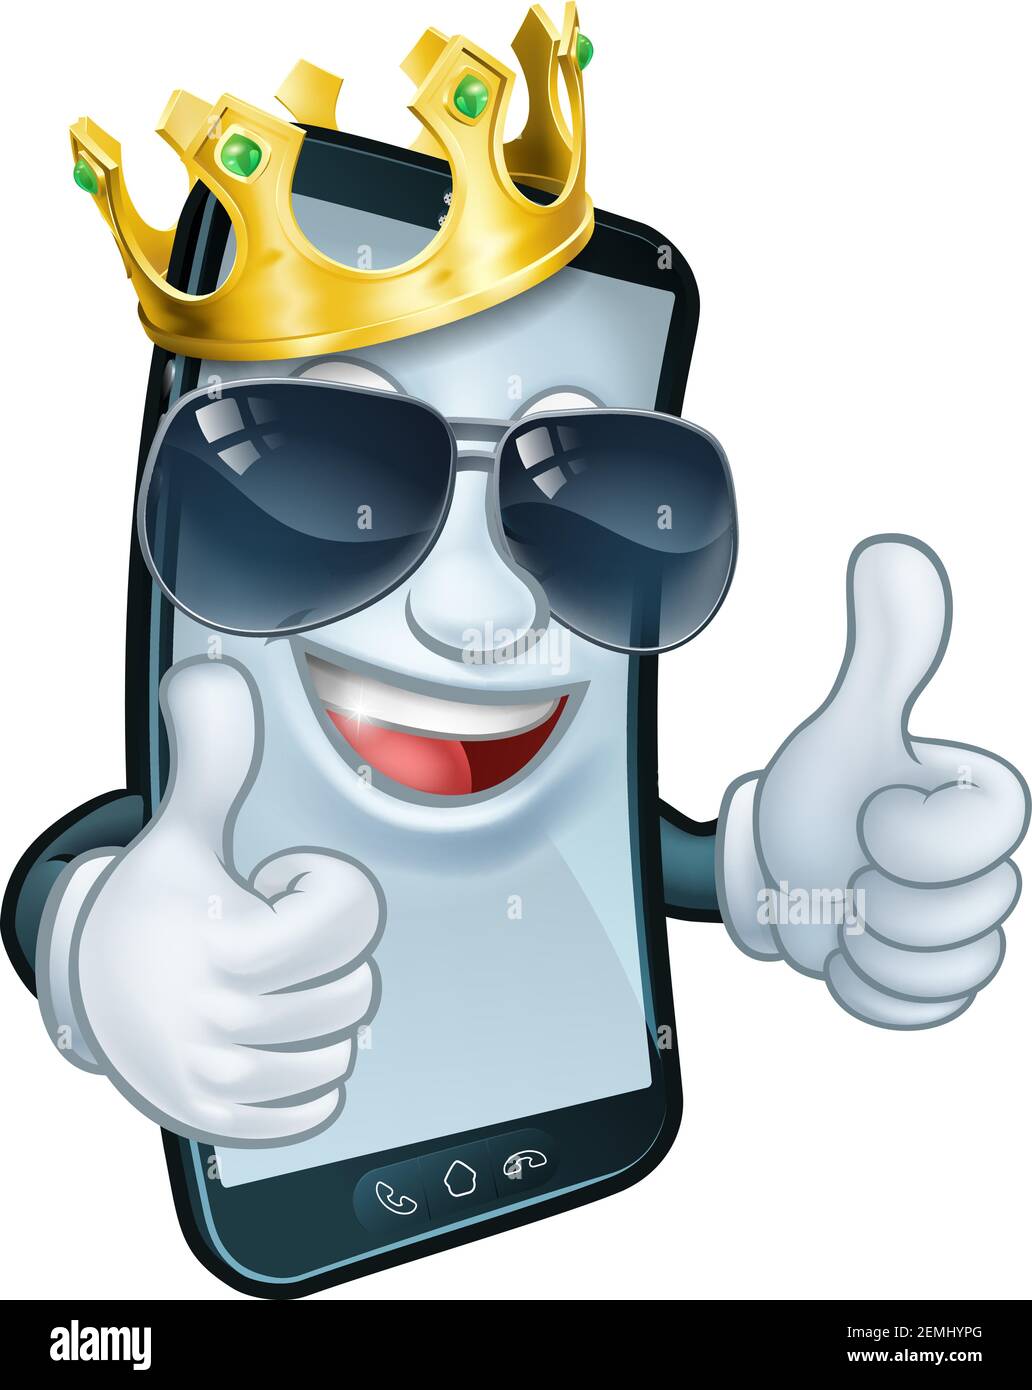 Mobile Phone Cool King Thumbs Up Cartoon Mascot Stock Vector